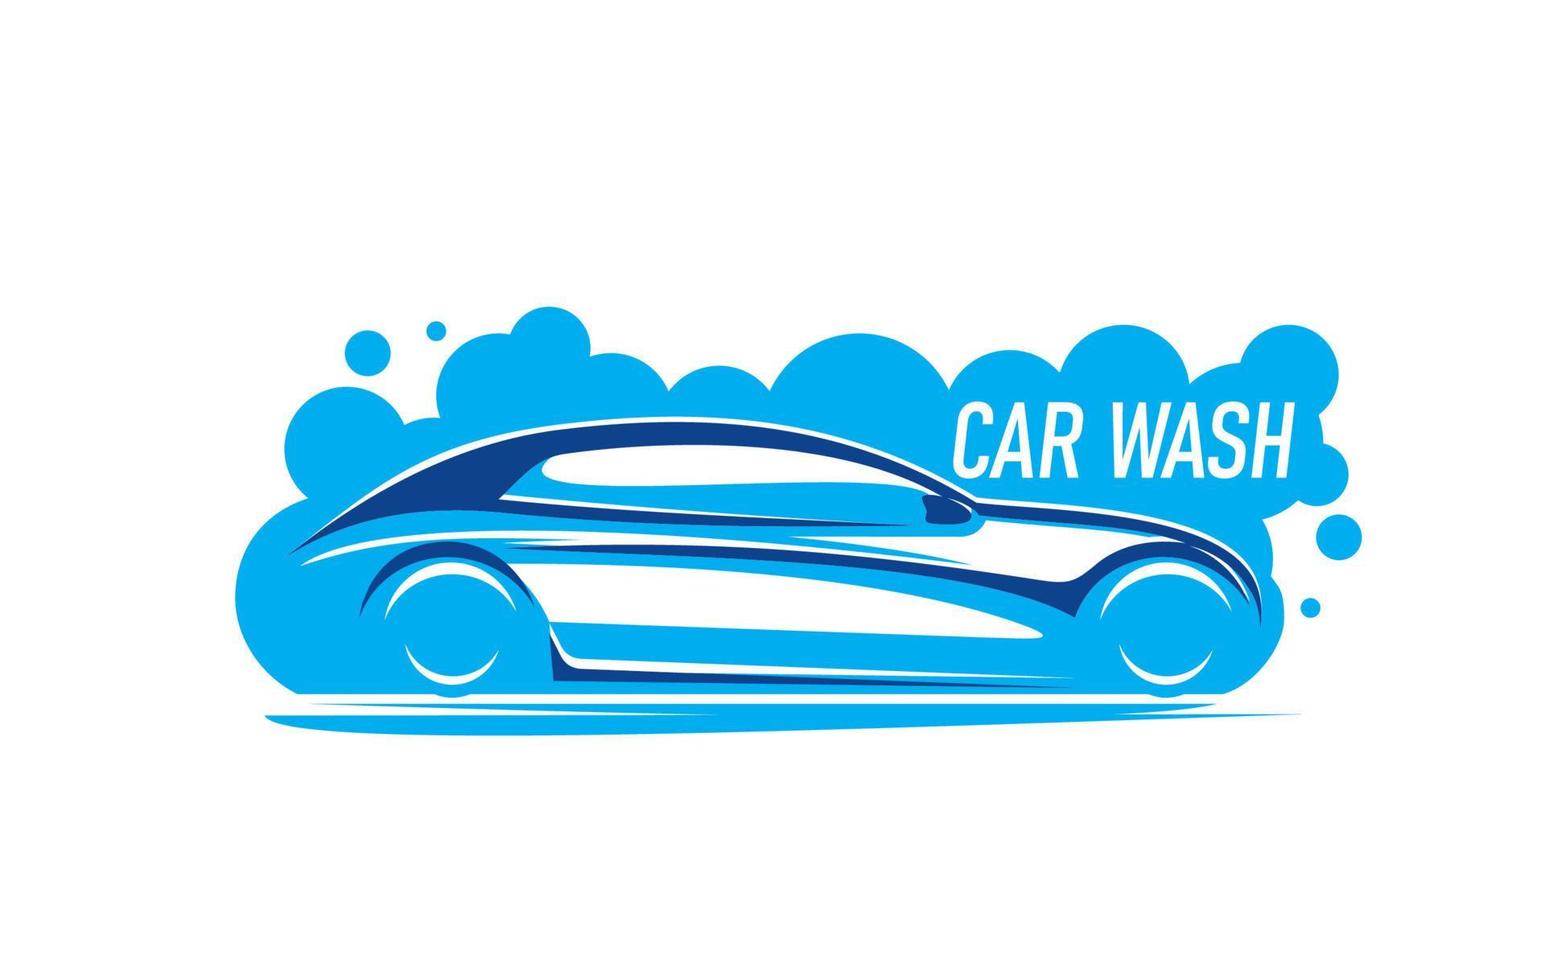 Car wash service icon with shampoo, soap bubbles vector